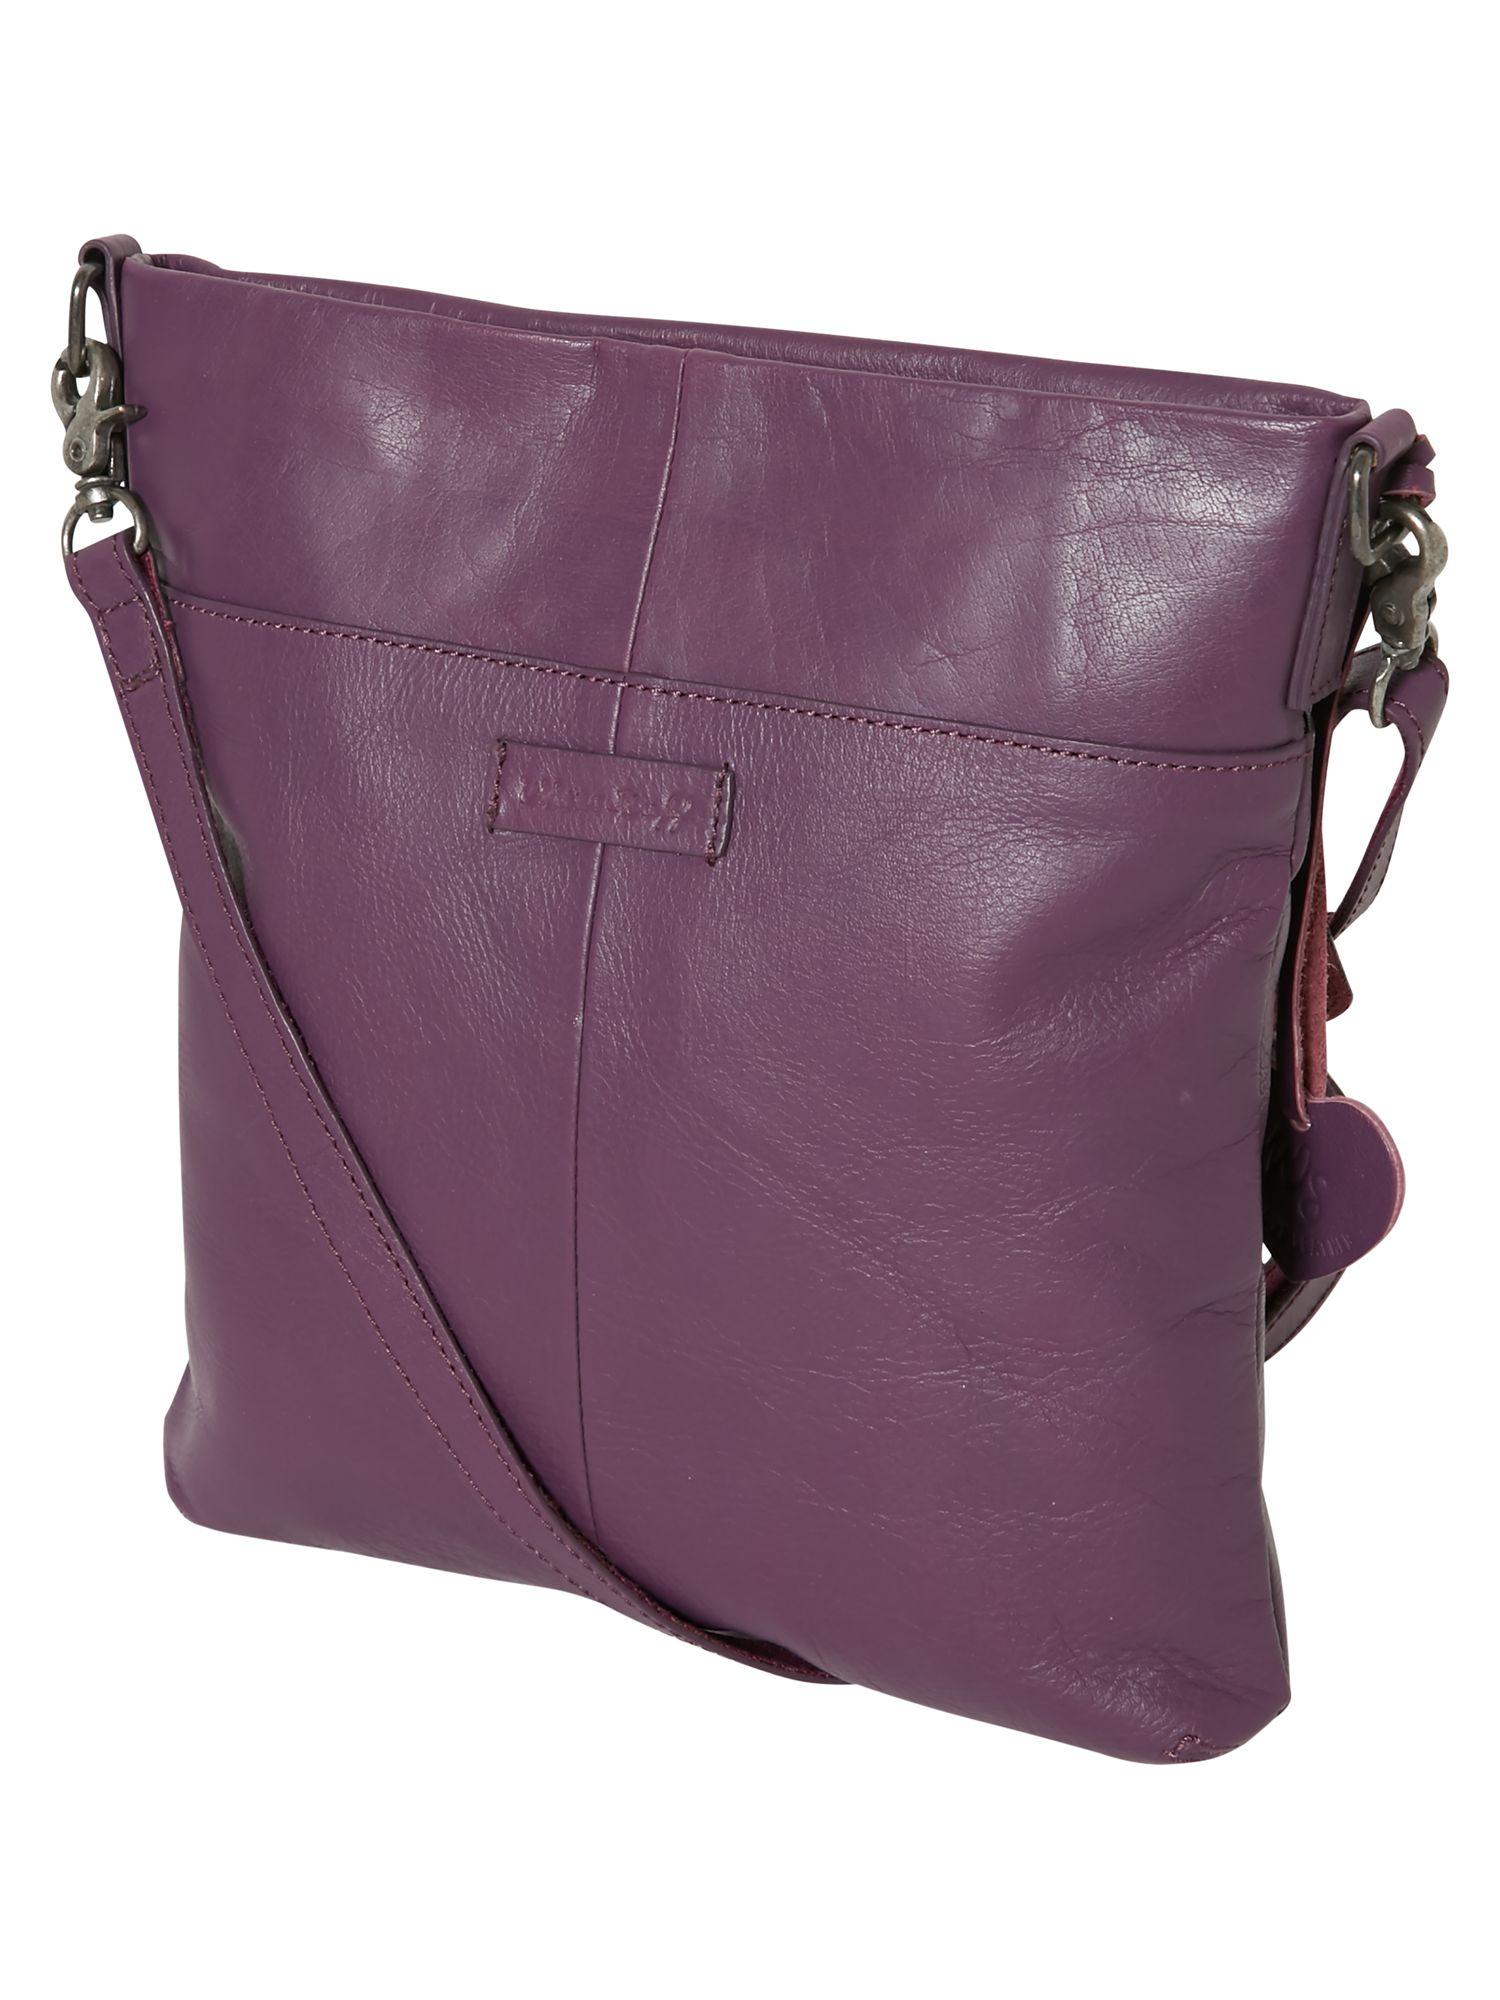 Lyst - White stuff Clover Crossbody Bag in Purple